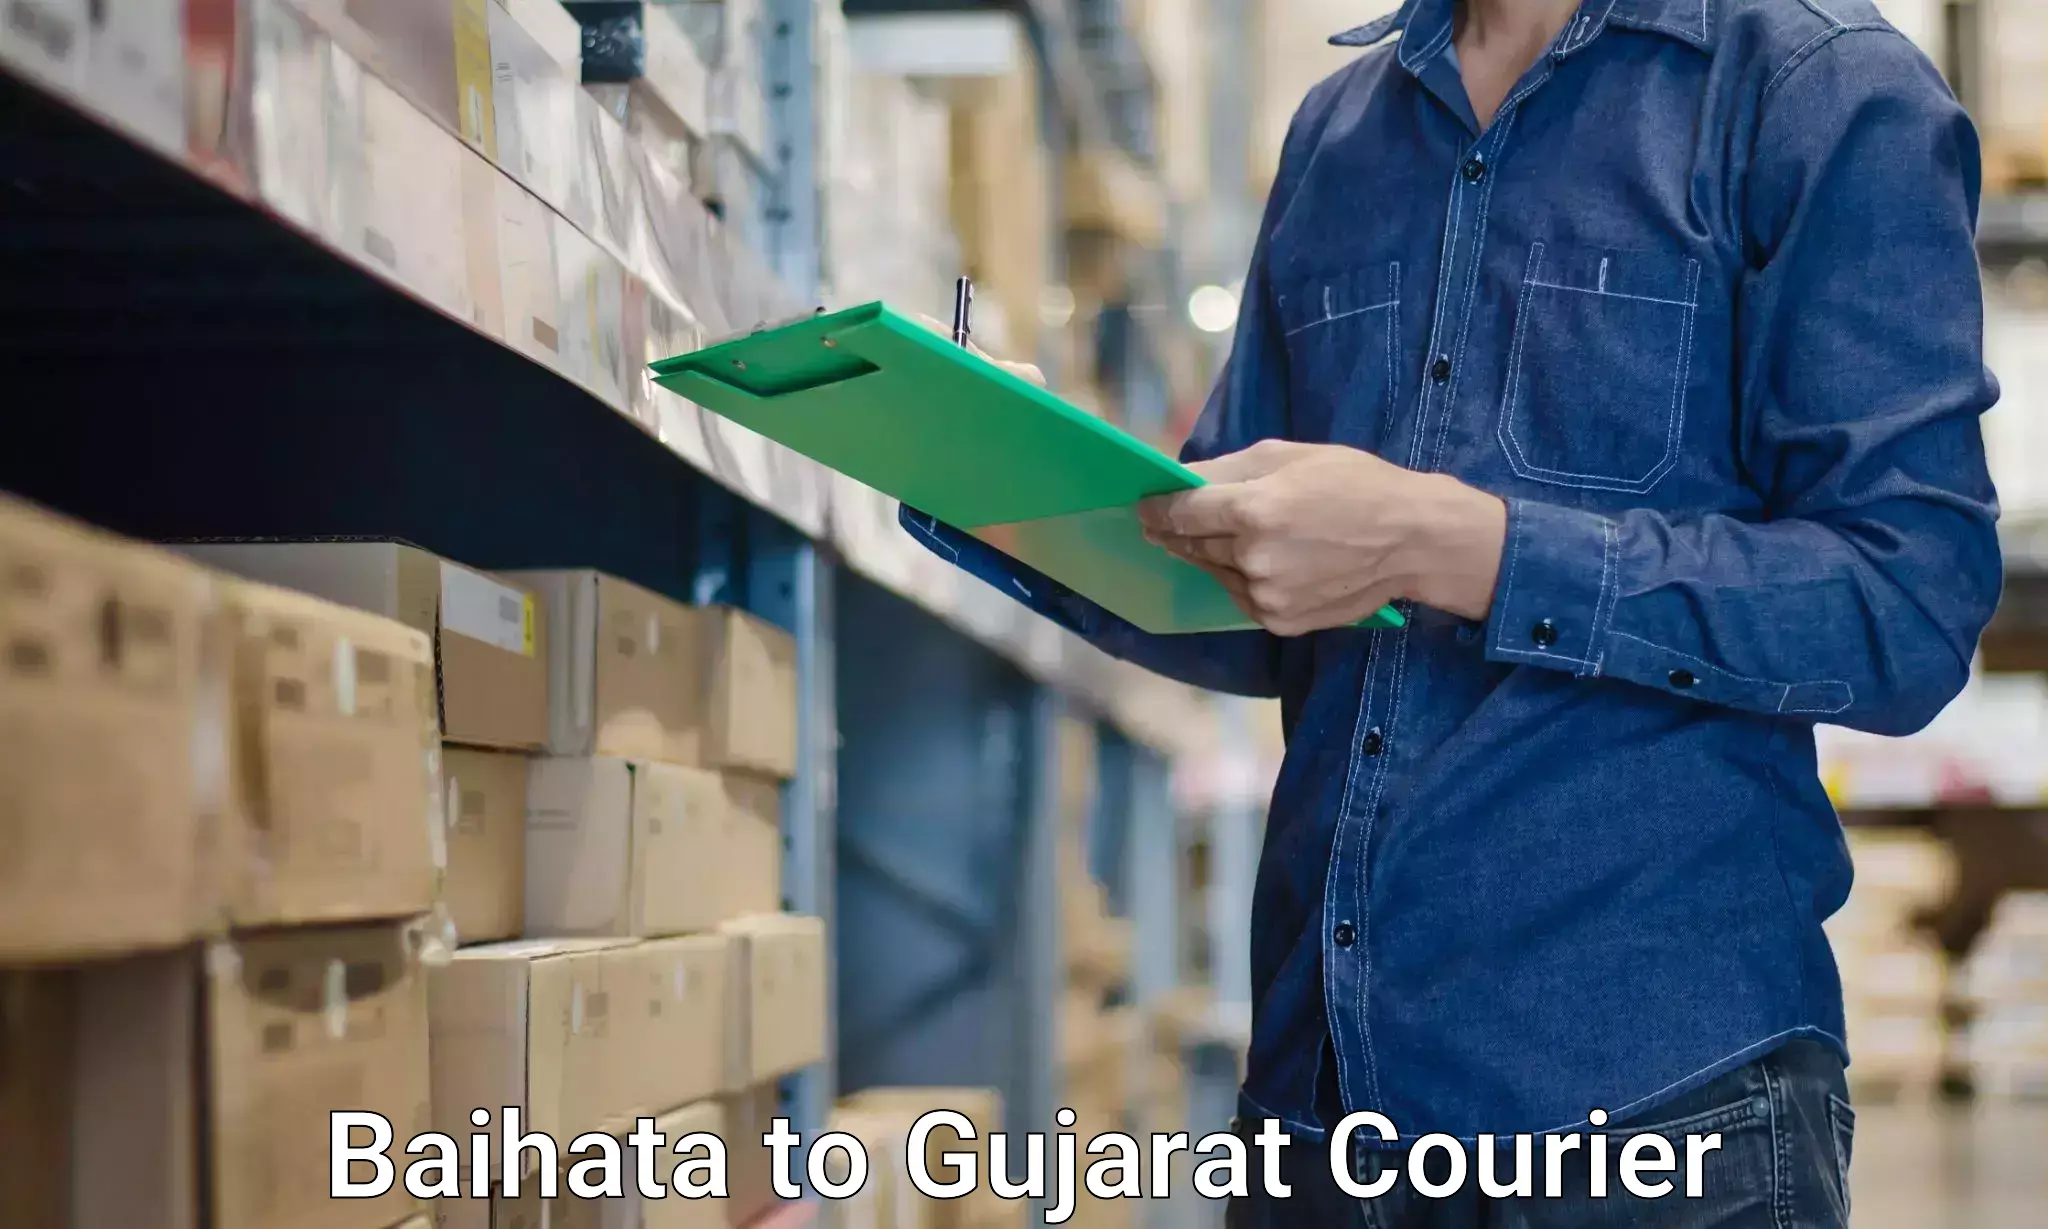 Furniture moving experts Baihata to Gujarat